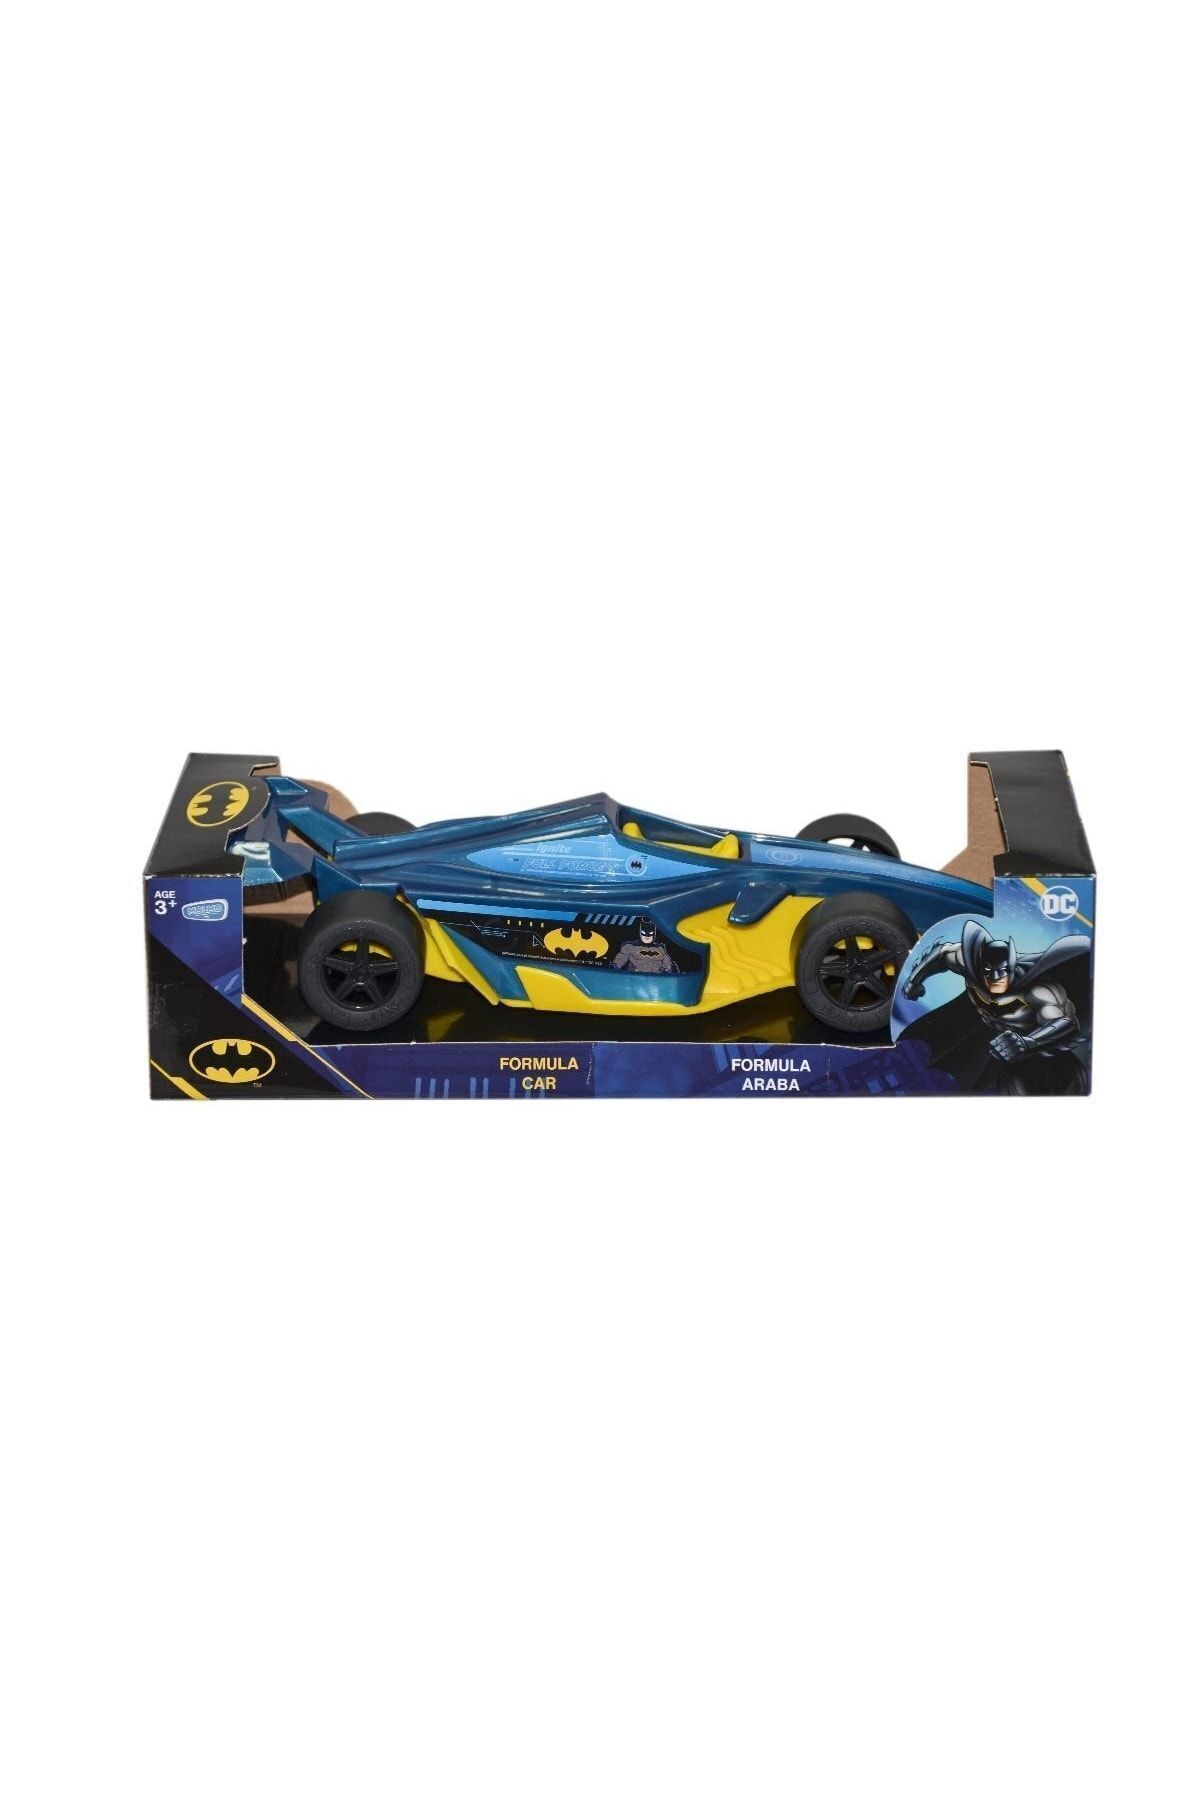 Batman Formula Aracı Ml504